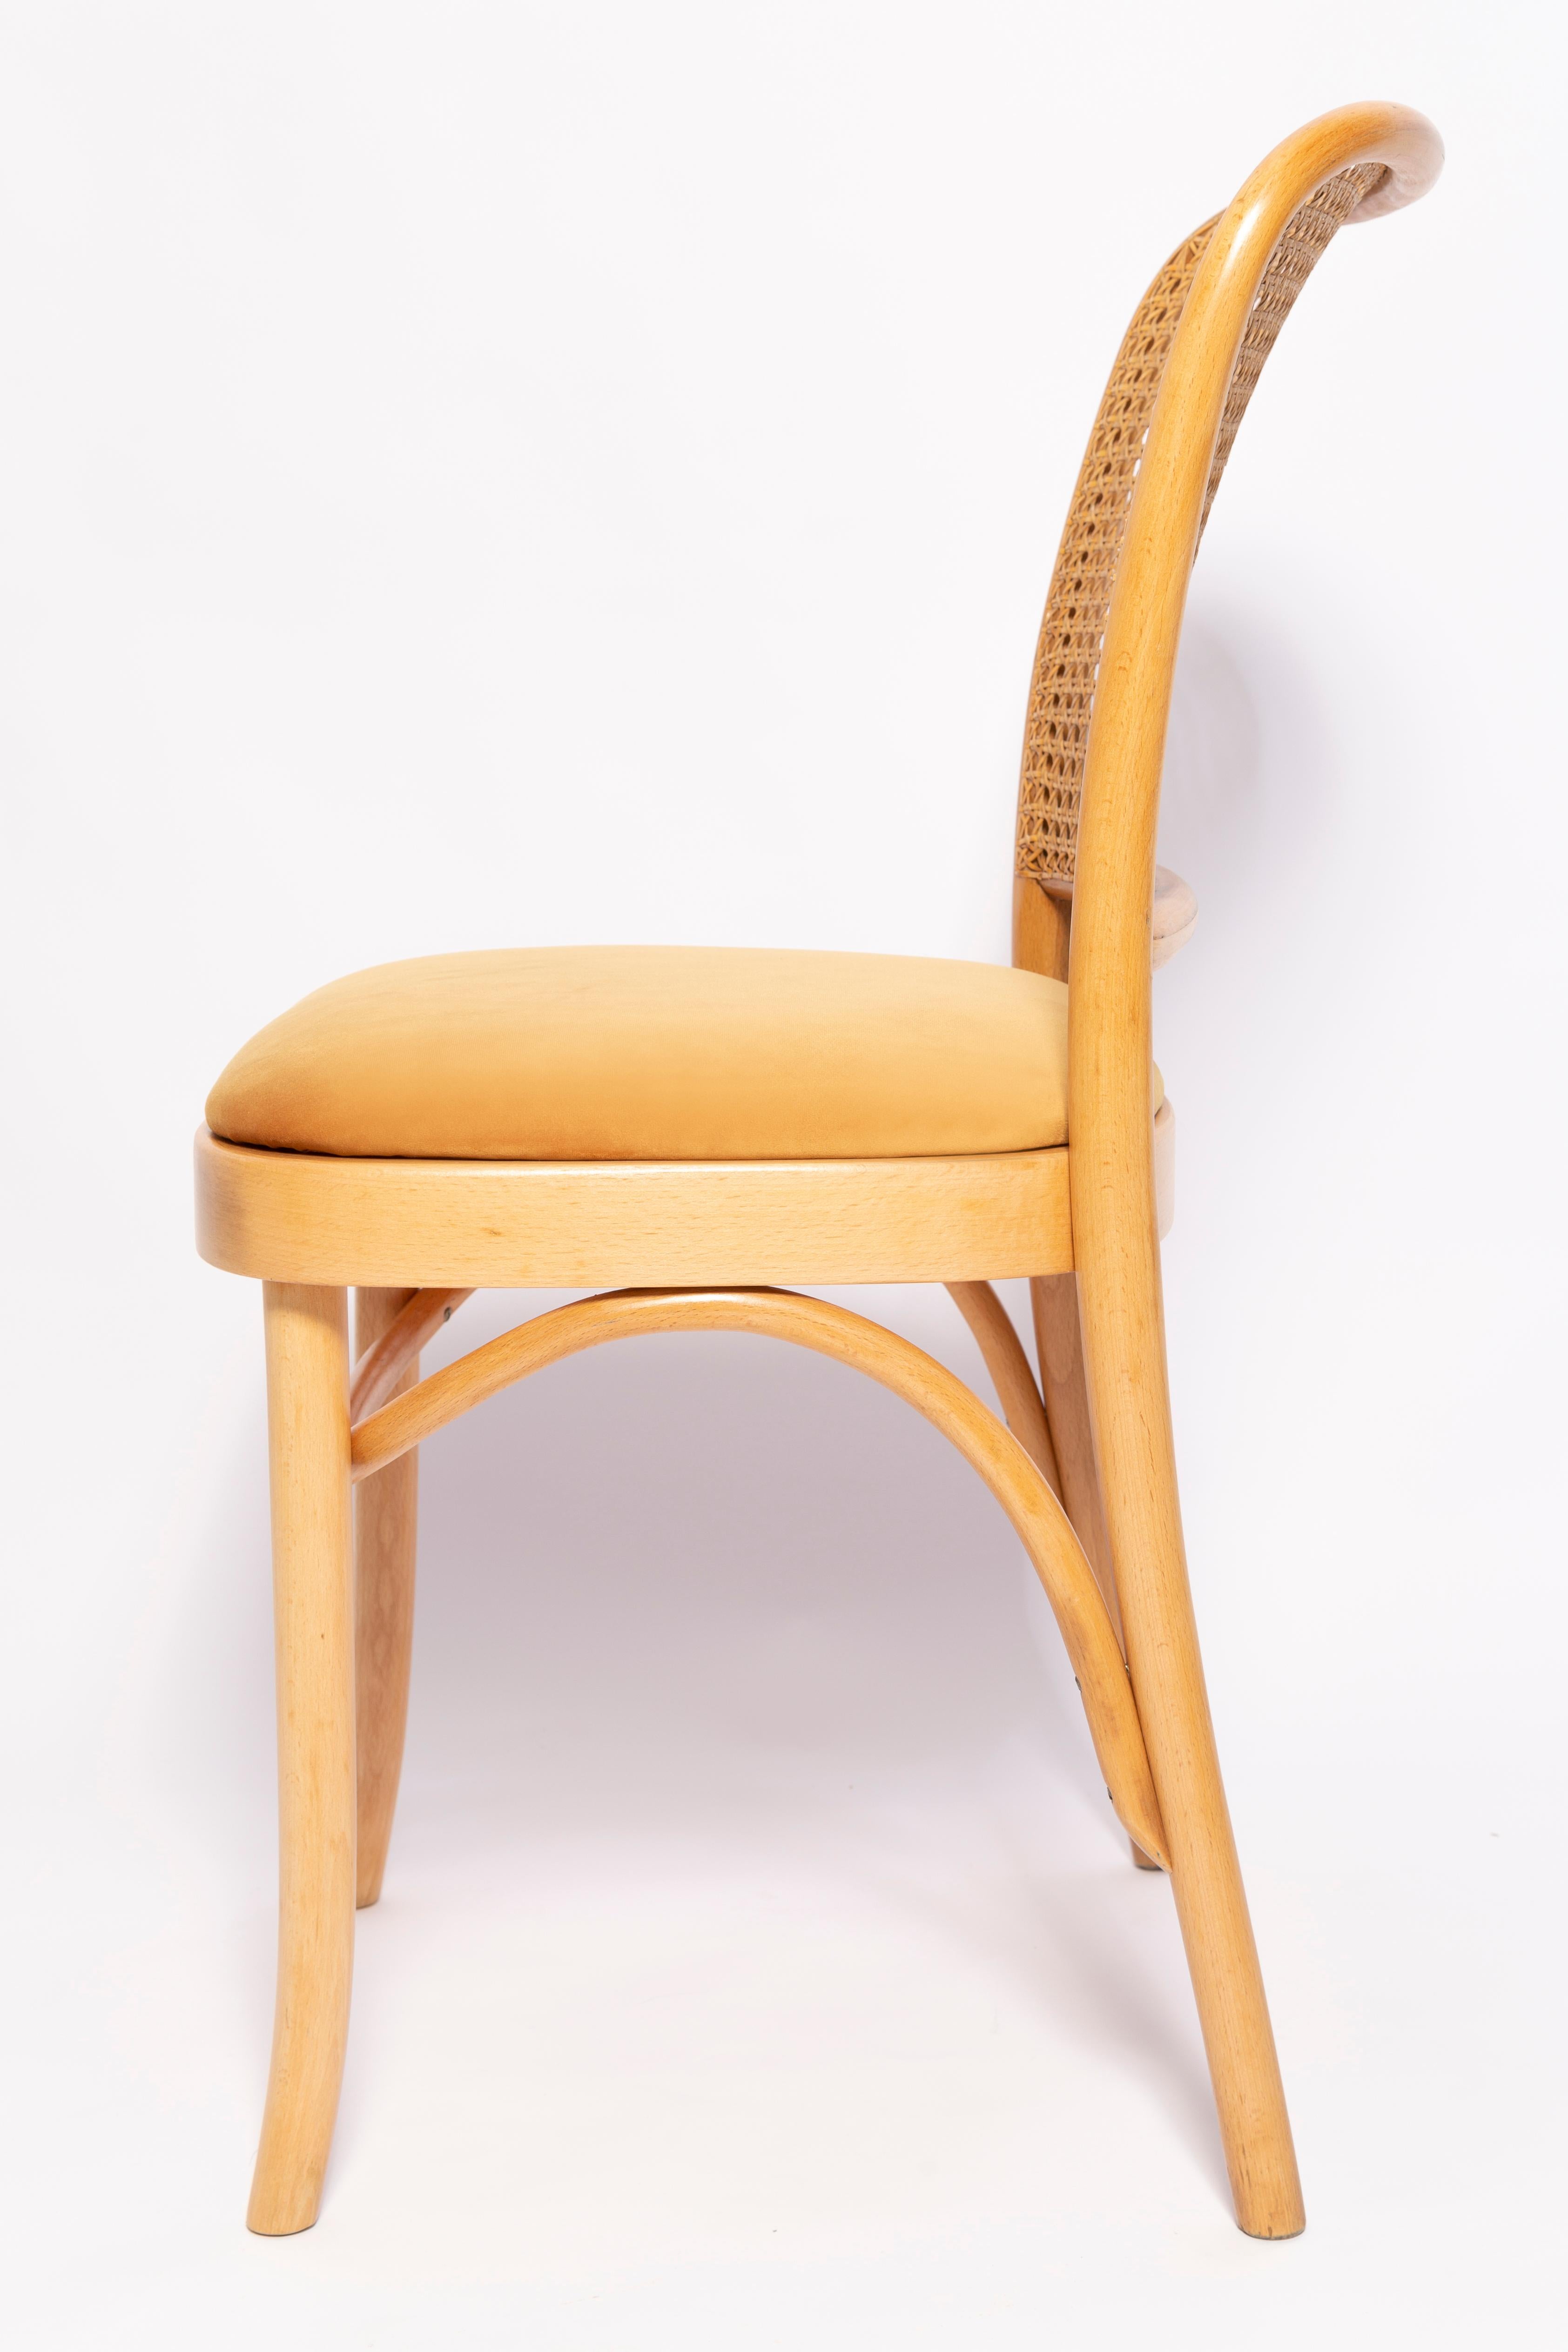 Mid-Century Yellow Velvet Thonet Wood Rattan Chair, Europe, 1960s For Sale 4